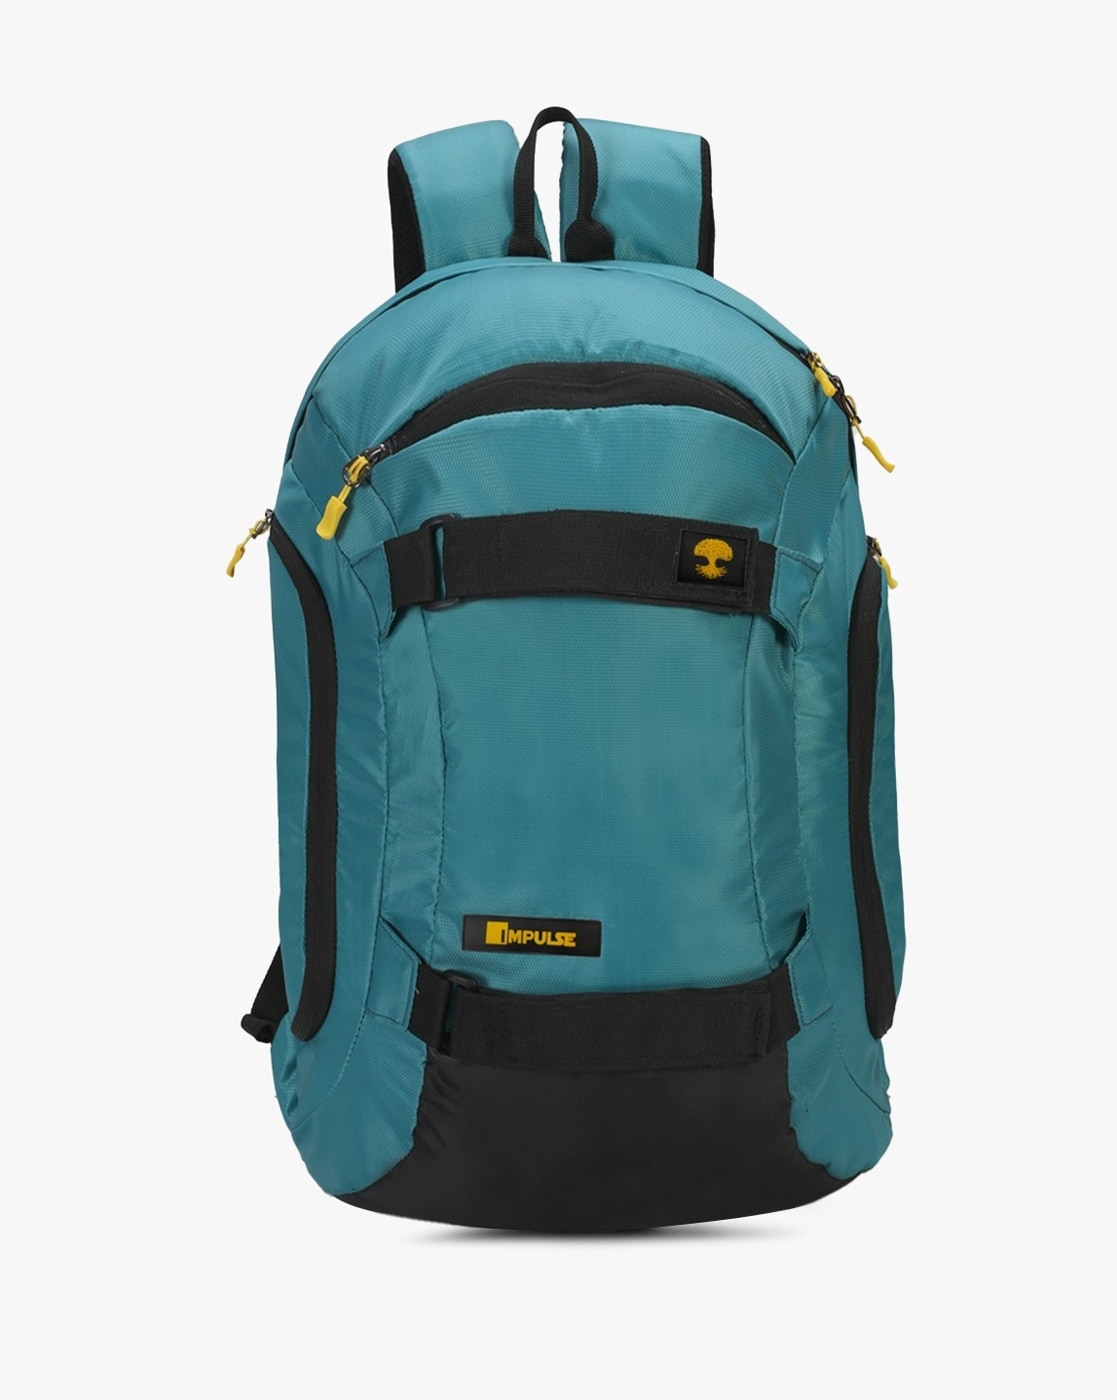 Impulse 75L Rucksack Bag Review | Best Rucksack Under 2000 | Best Bag For  Hiking/Camping/Trekking - YouTube